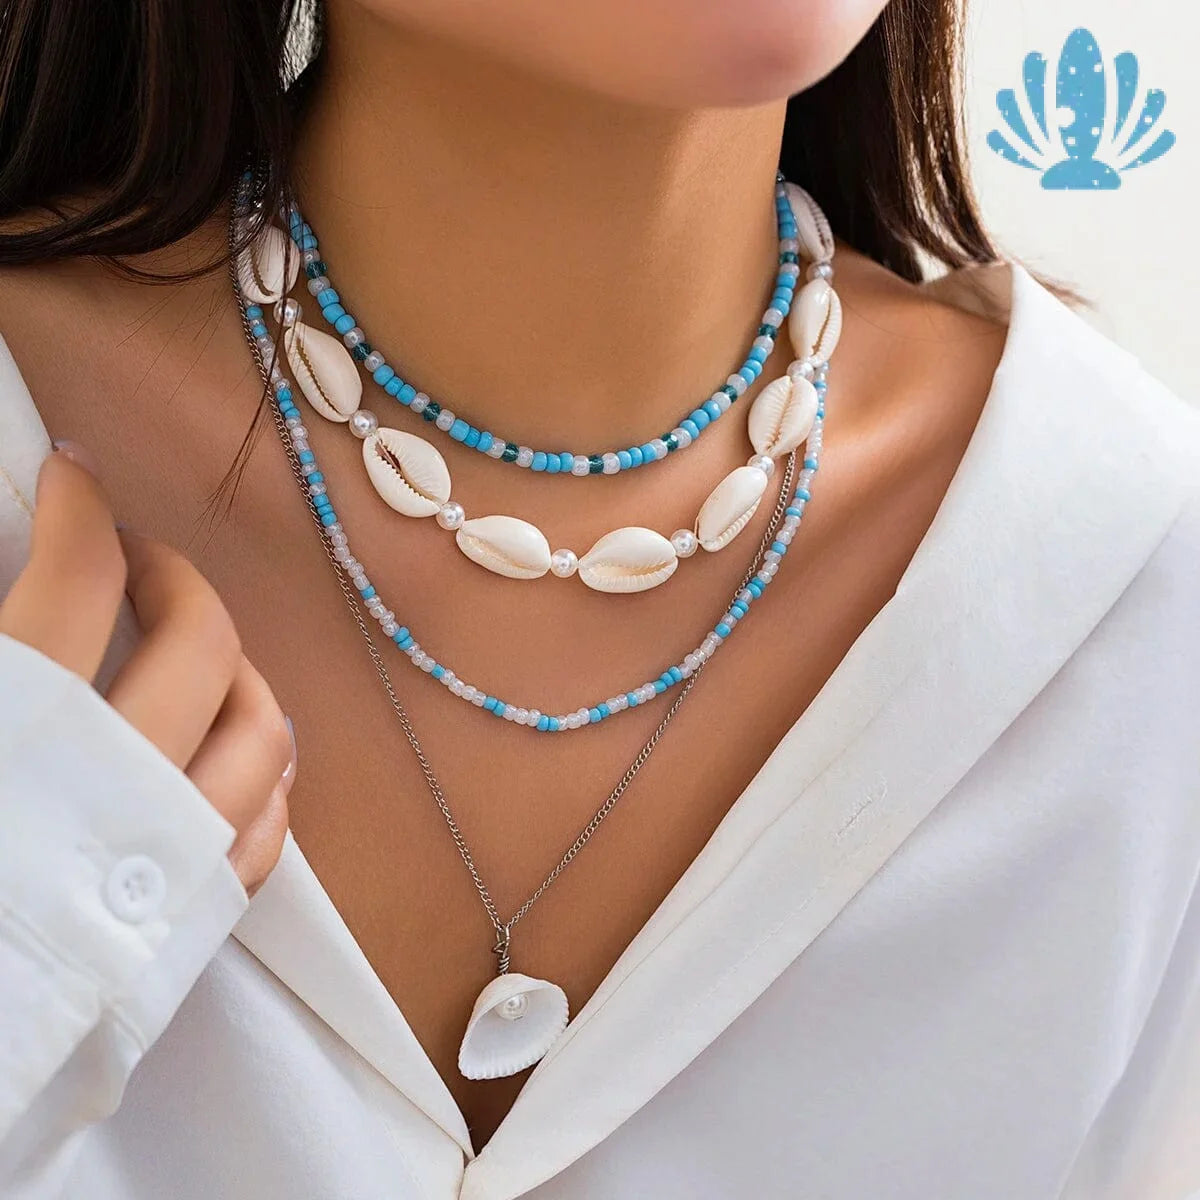 Women's puka shell necklace